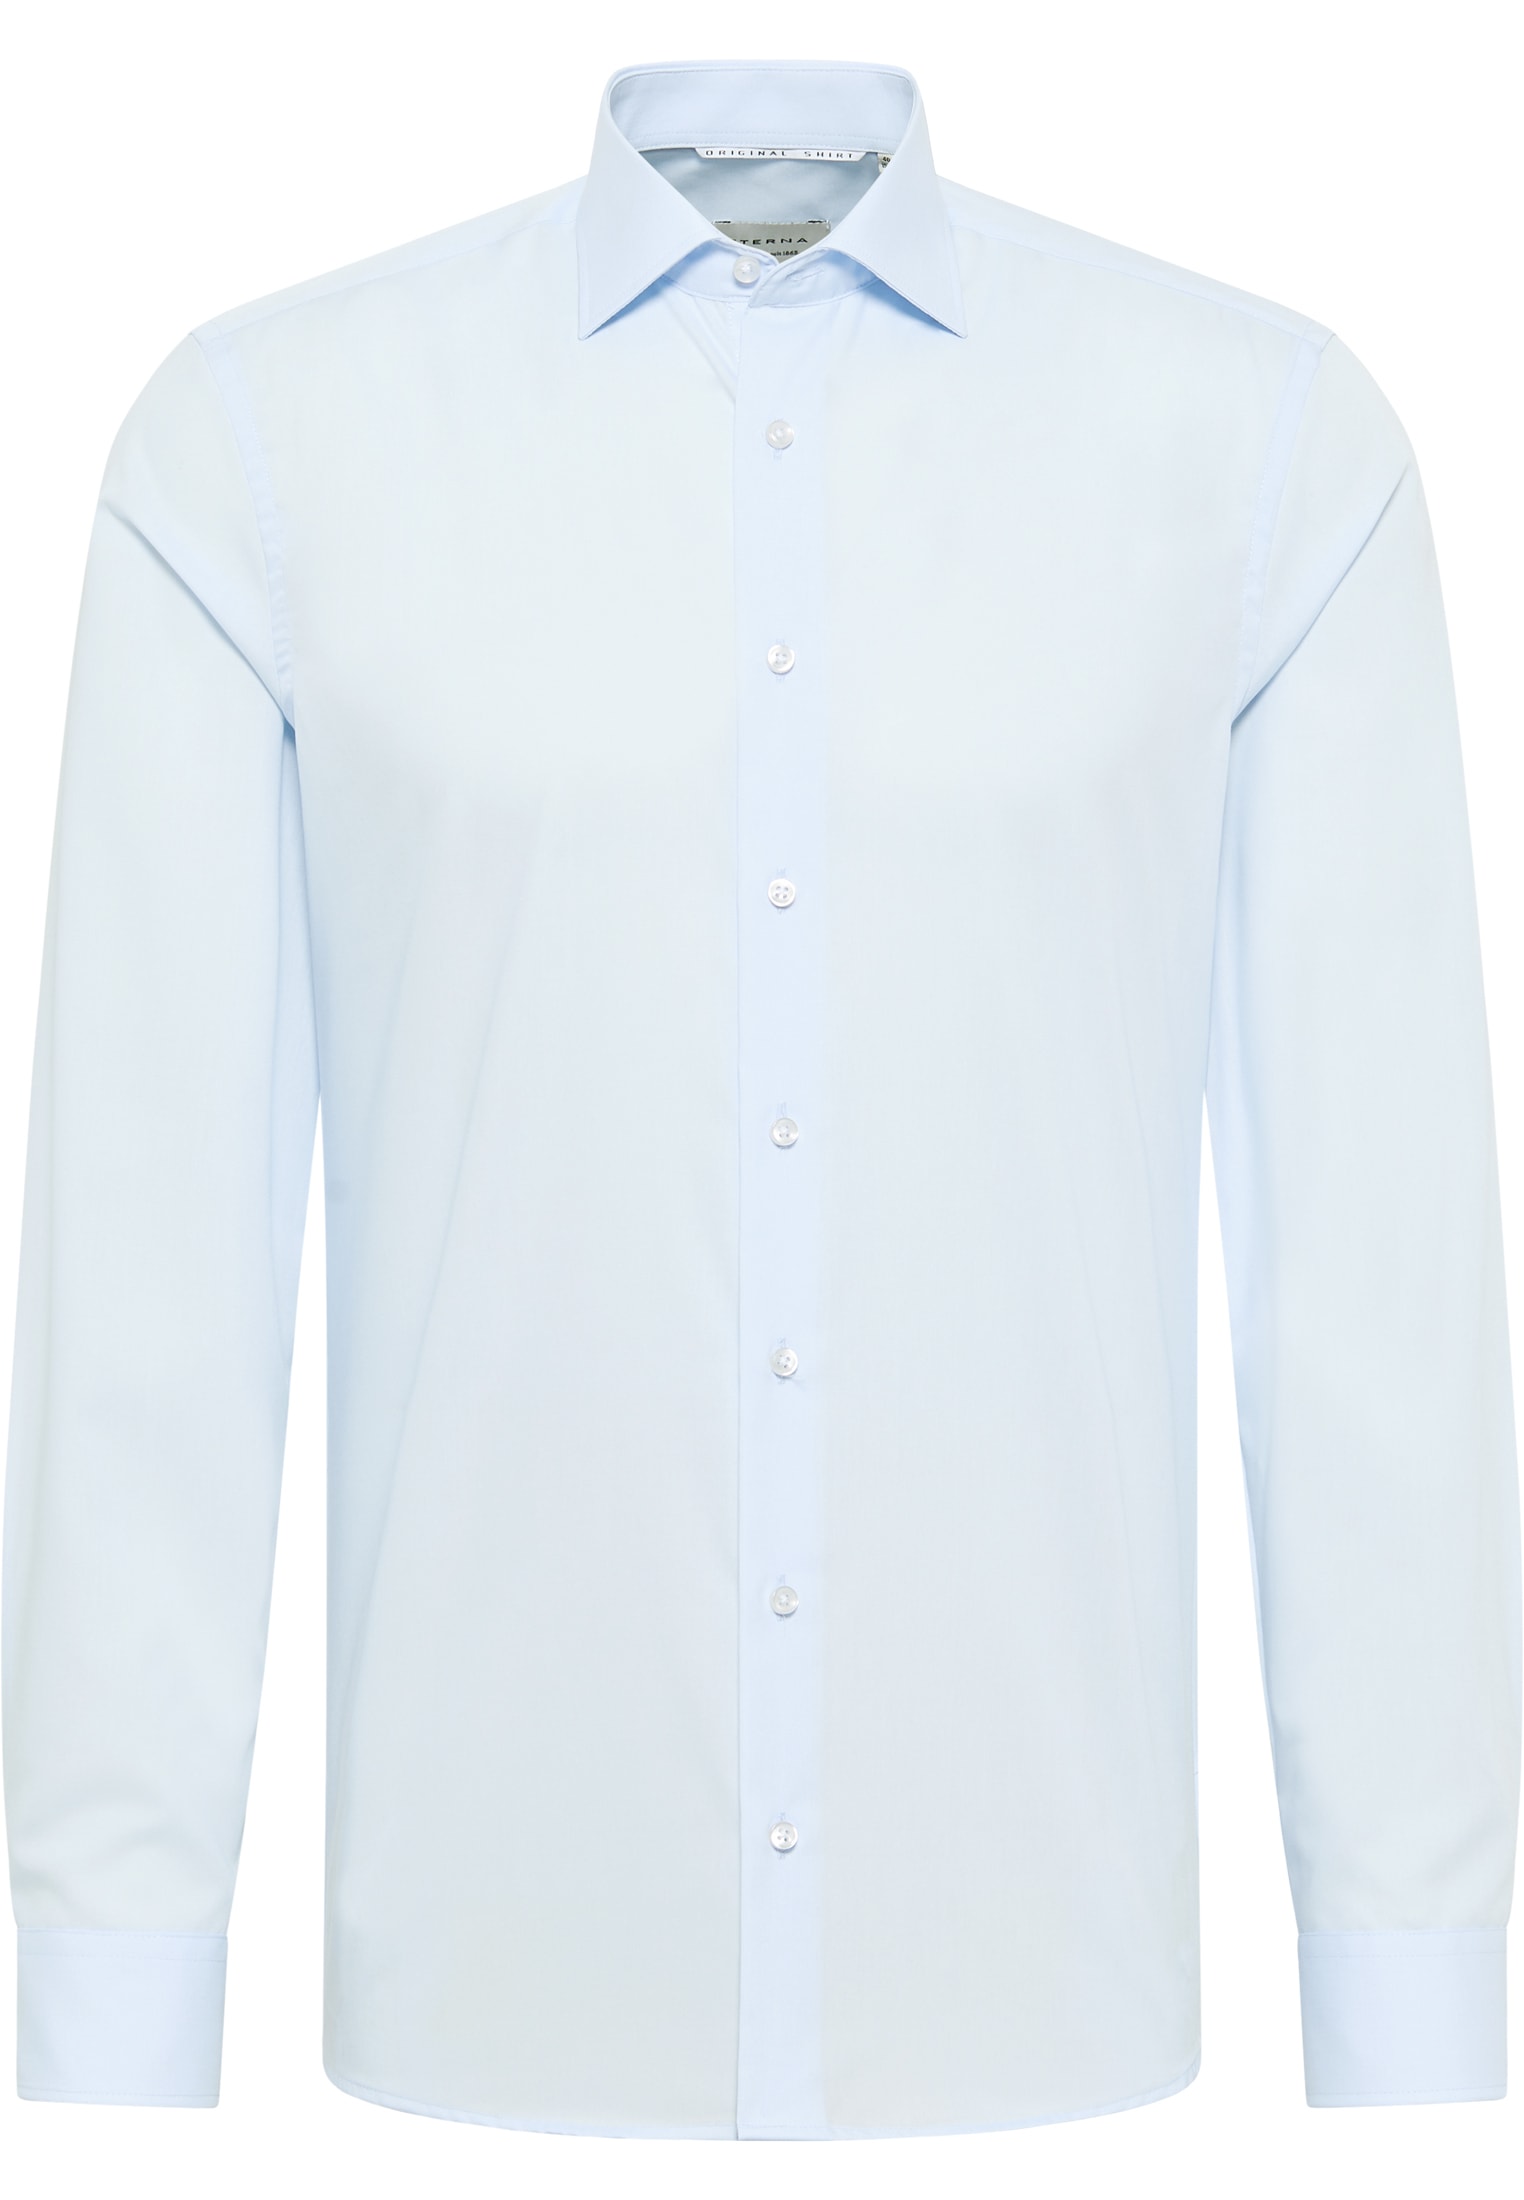 SLIM FIT Original Shirt bleu clair uni